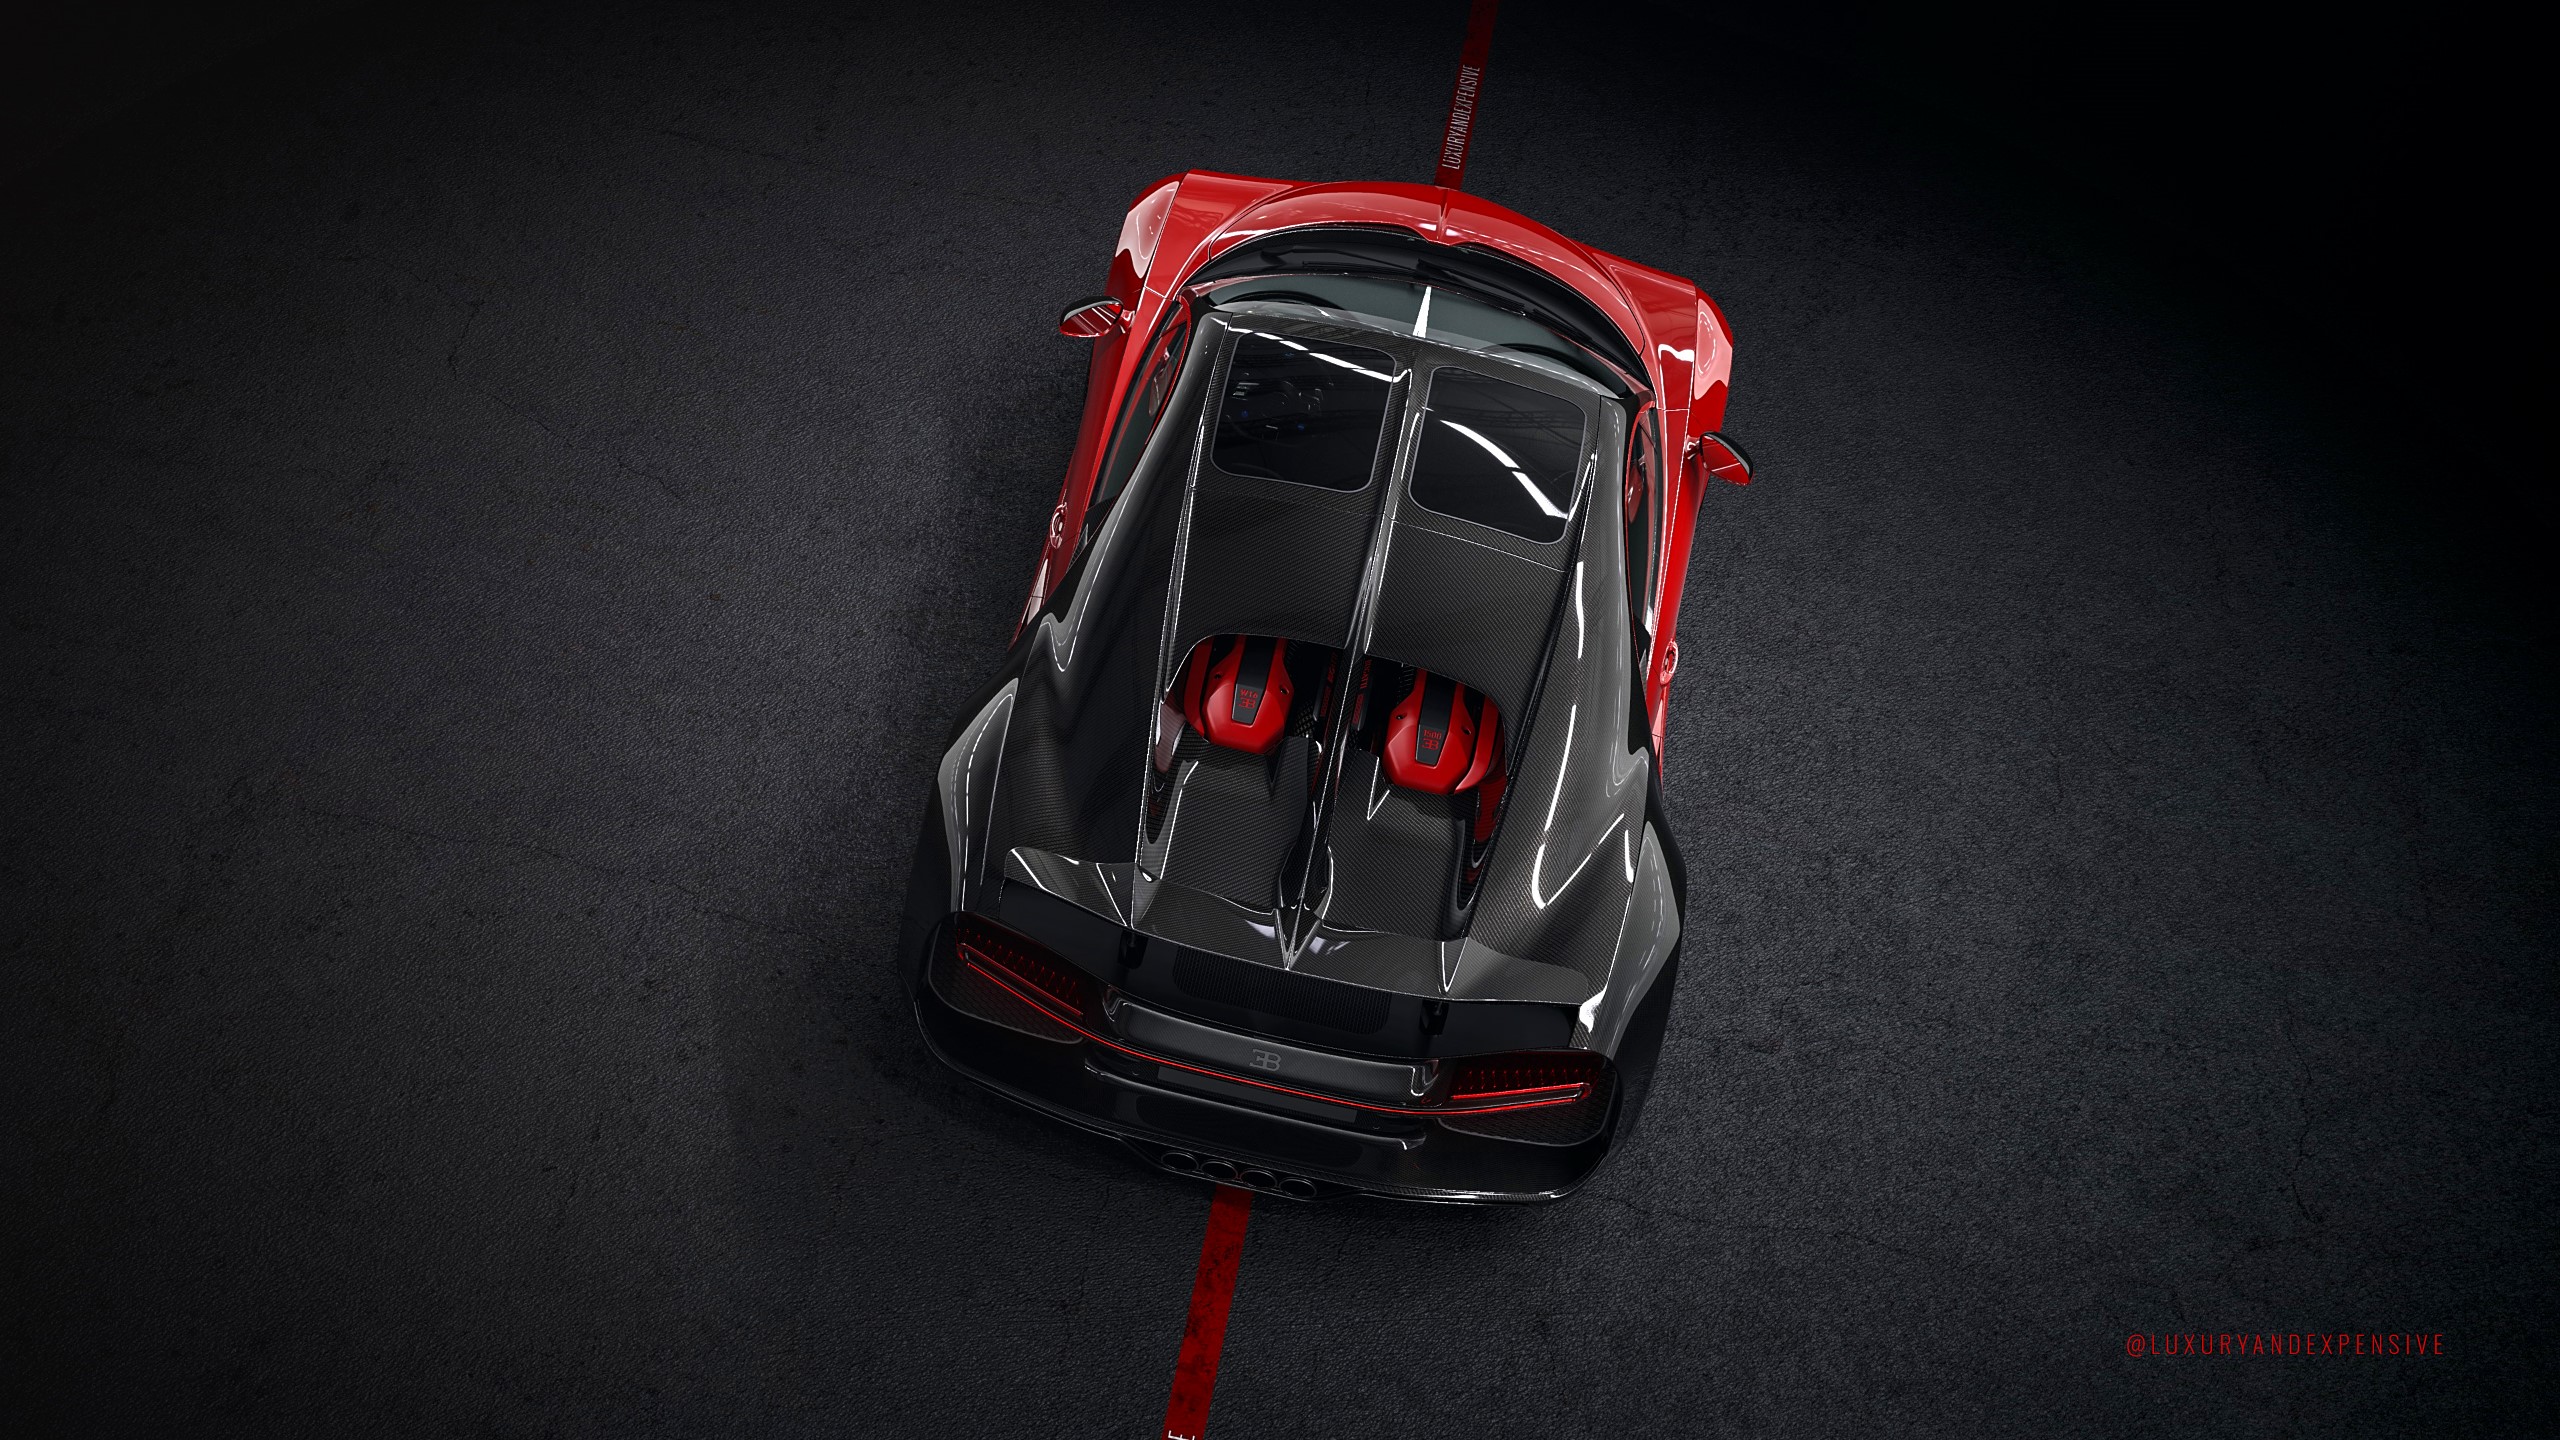 km Sport - Sky Bugatti 600 Roof - red Chiron - View